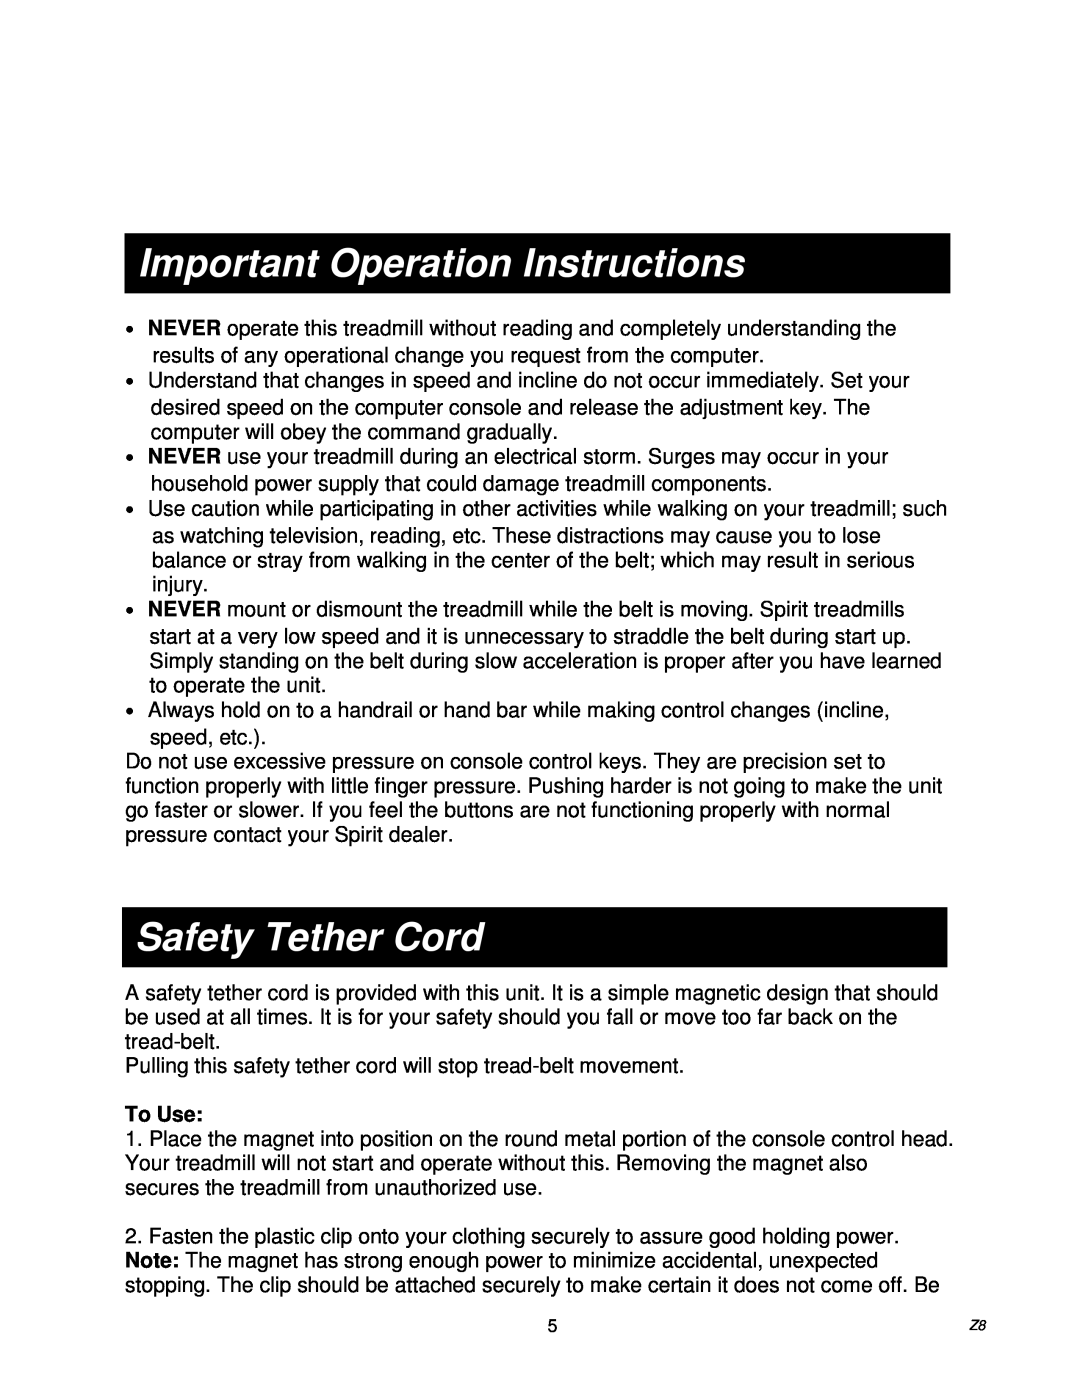 Spirit Z100, Z700, Z500, Z300 owner manual Important Operation Instructions, Safety Tether Cord, To Use 